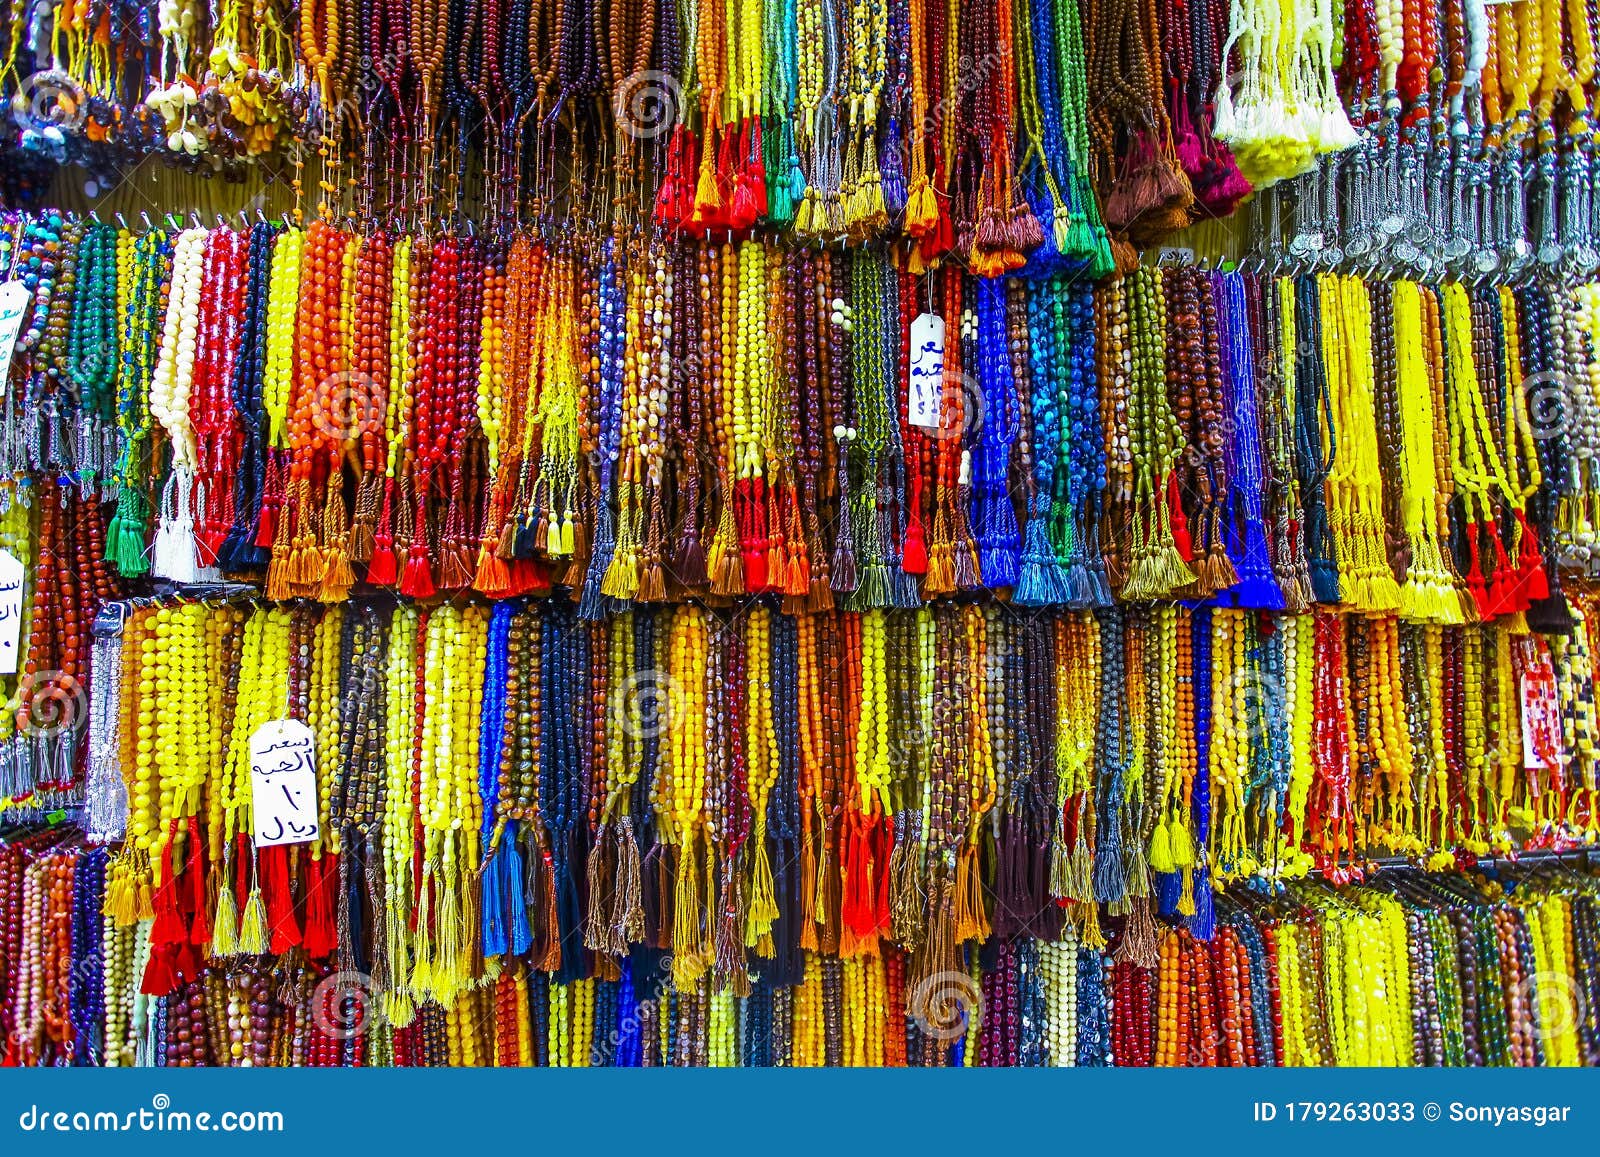 various prayer beads, souvenir for pilgrims during hajj and umra in mecca, saudi arabia.